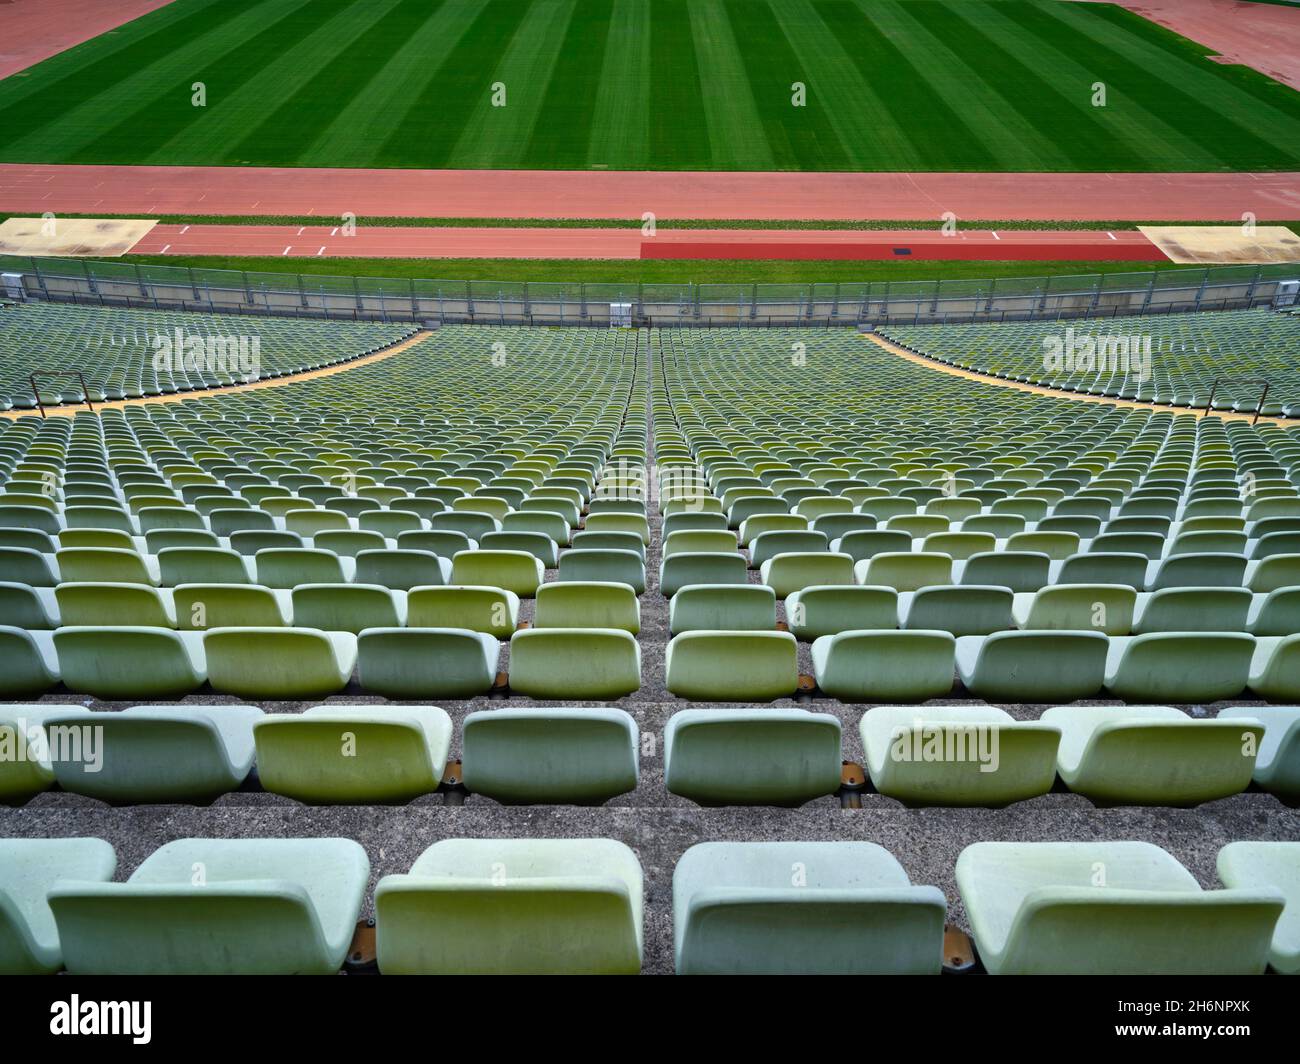 Olympic Stadium in the Olympic Park, Munich, Football Stadium, Munich